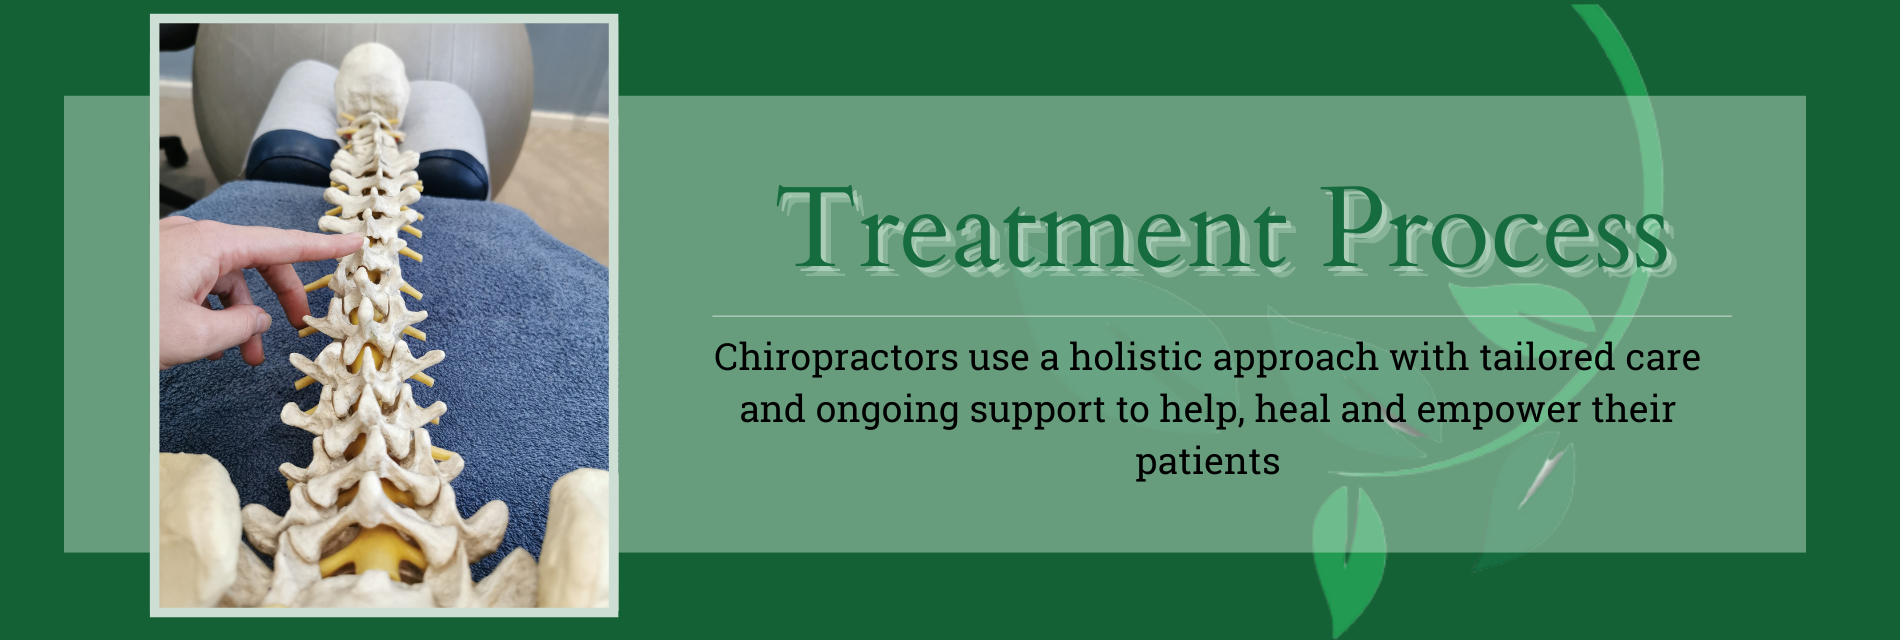 SpineWorks - Treatment Process Header